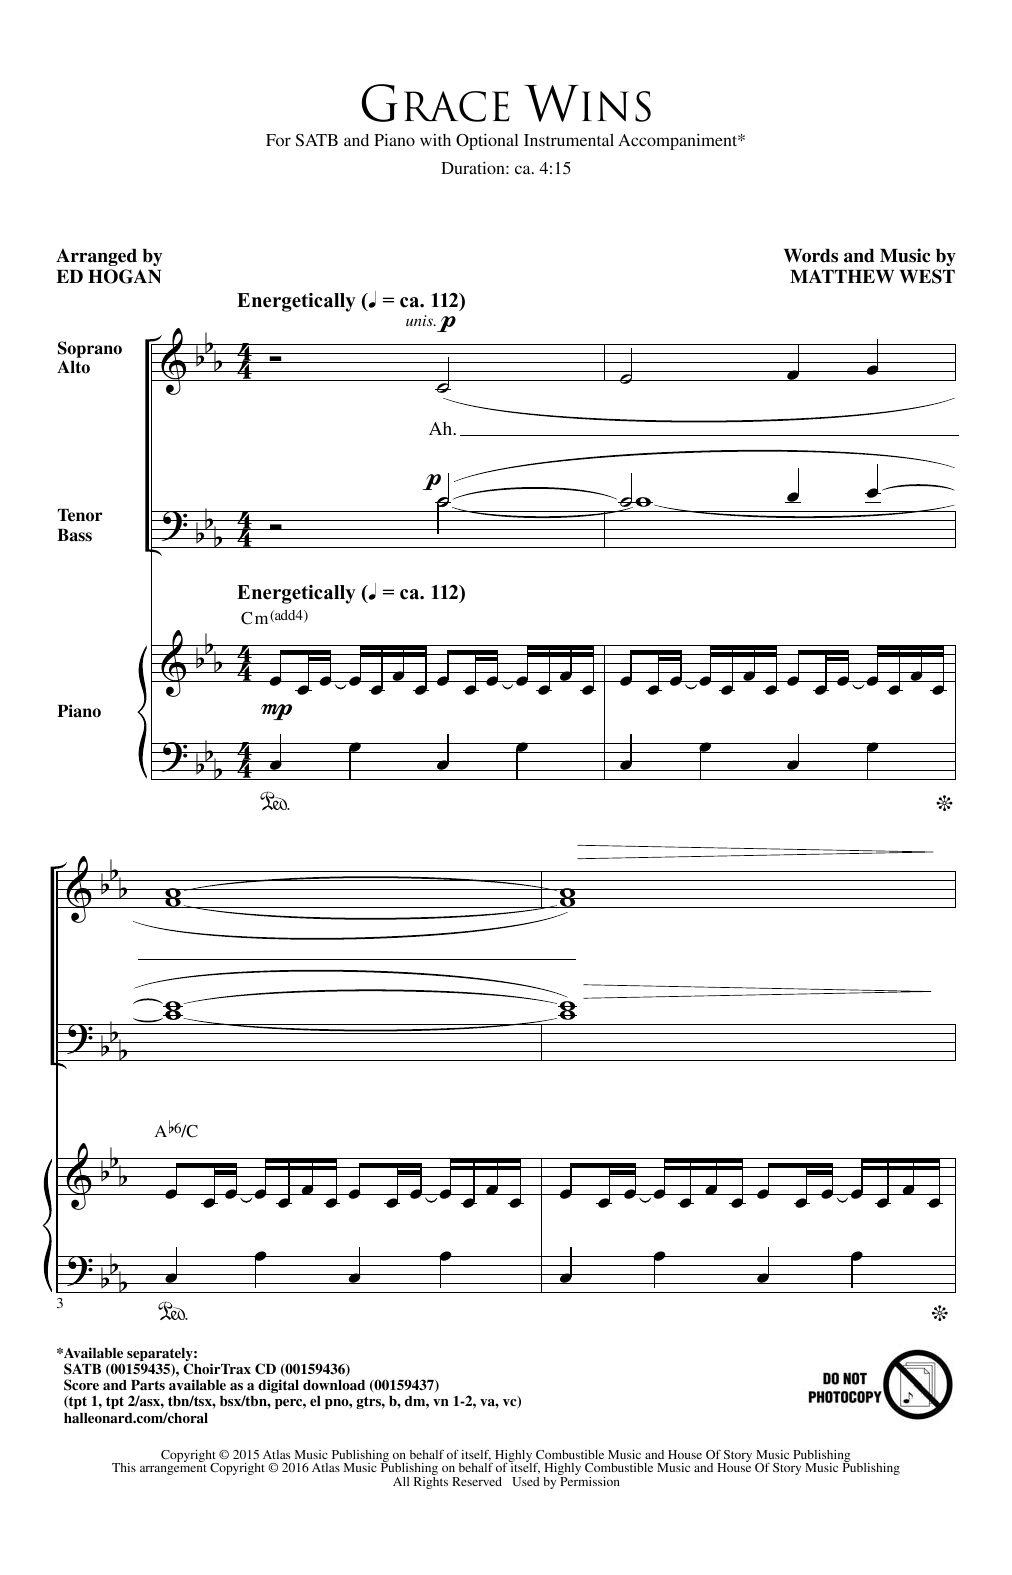 Ed Hogan Grace Wins Sheet Music Notes & Chords for SATB - Download or Print PDF